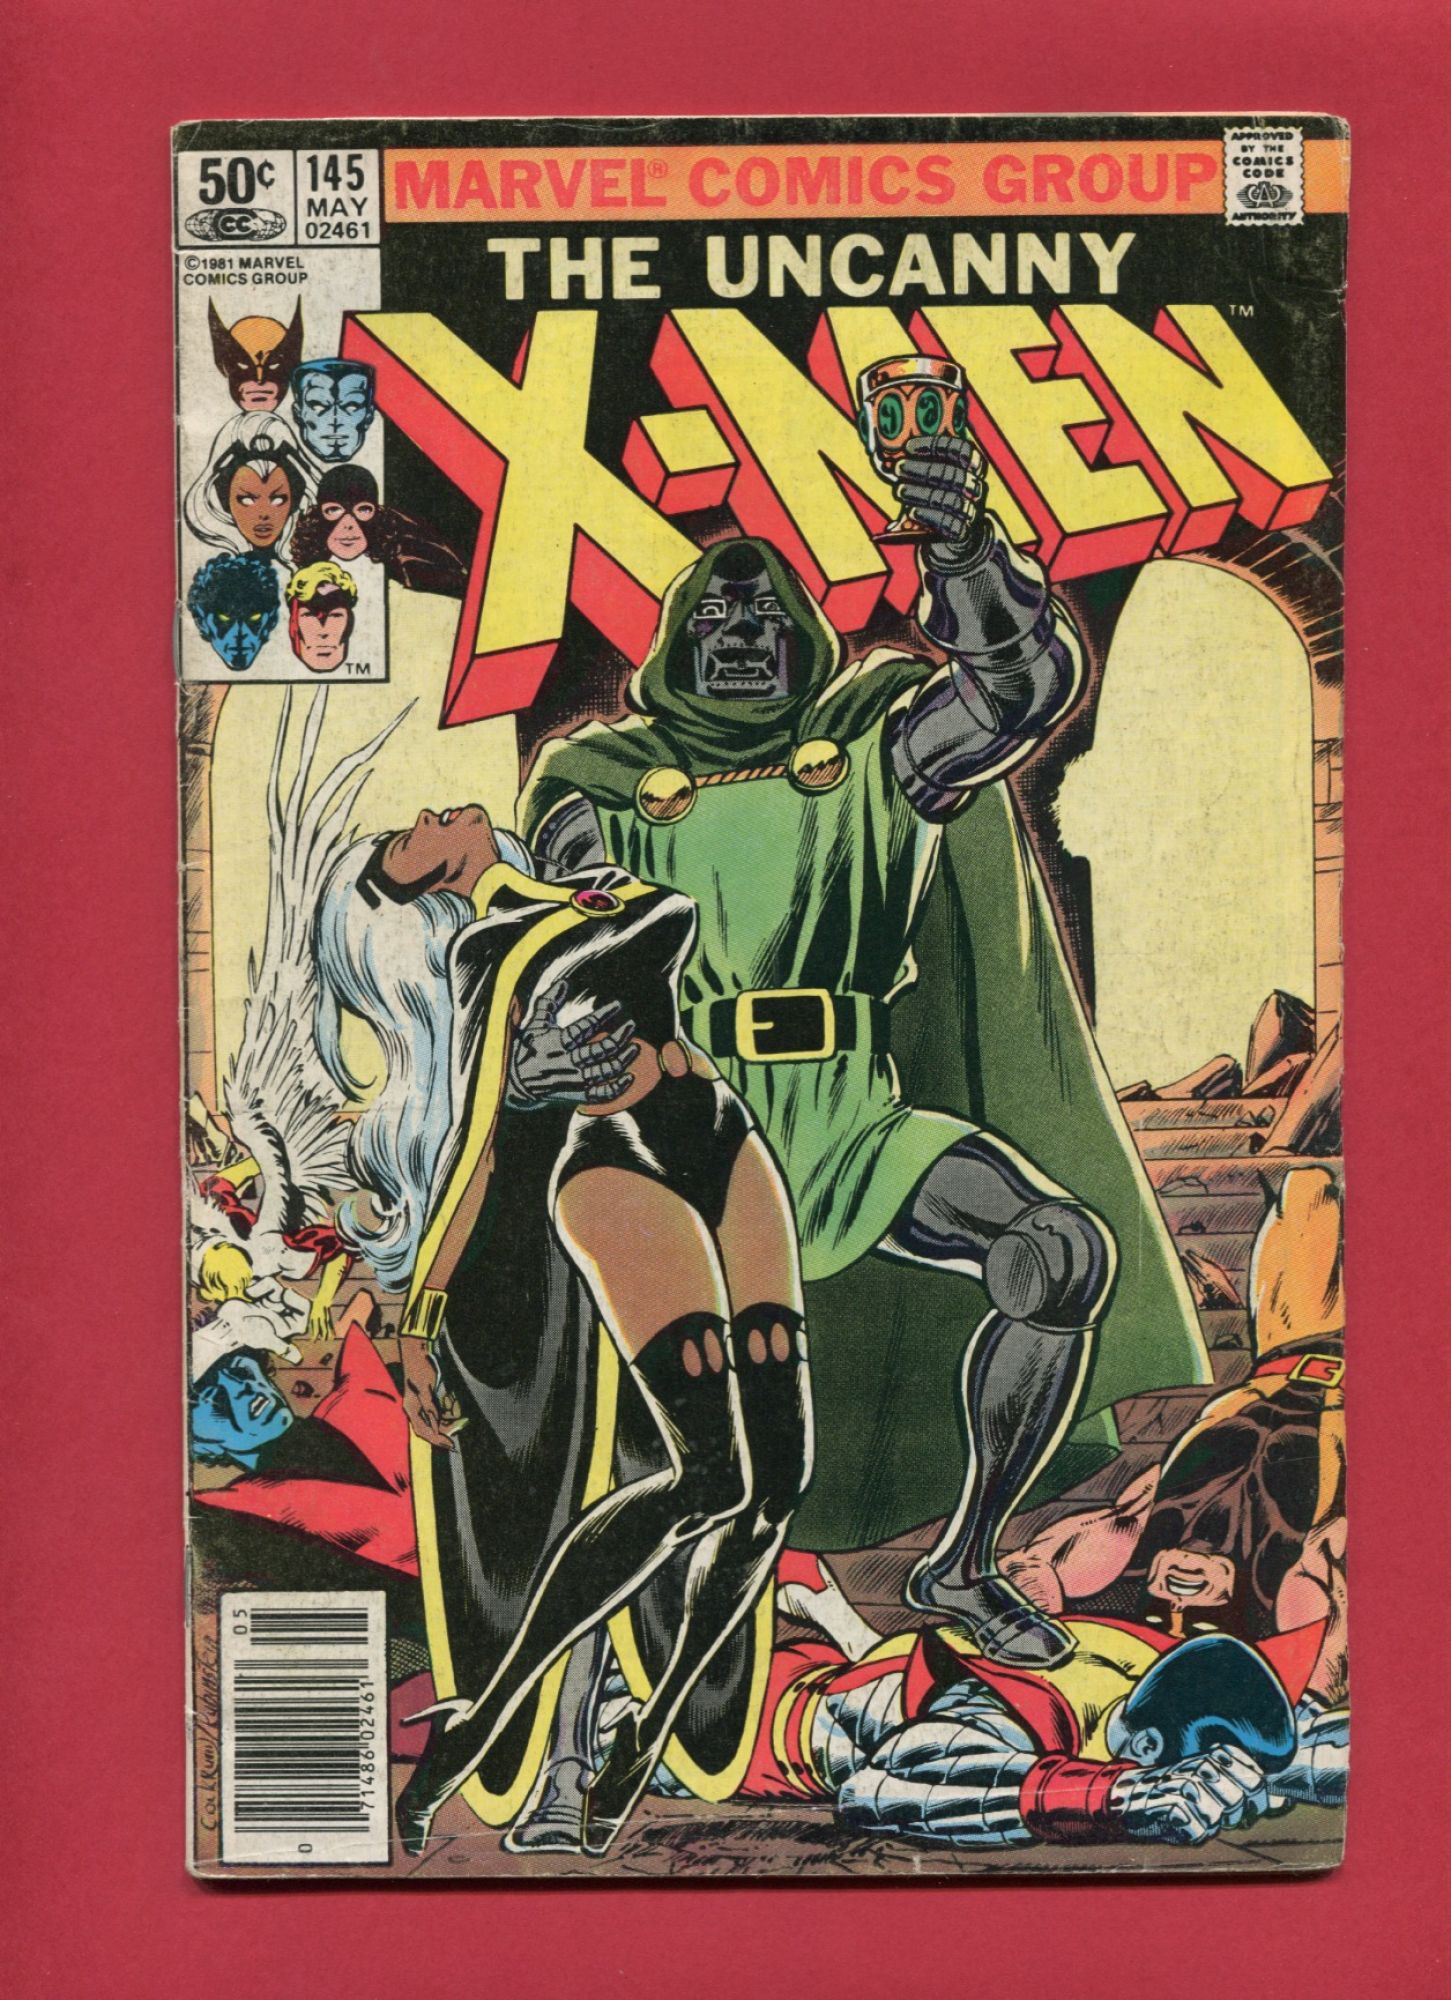 Uncanny X-Men #145, May 1981, 4.5 VG+